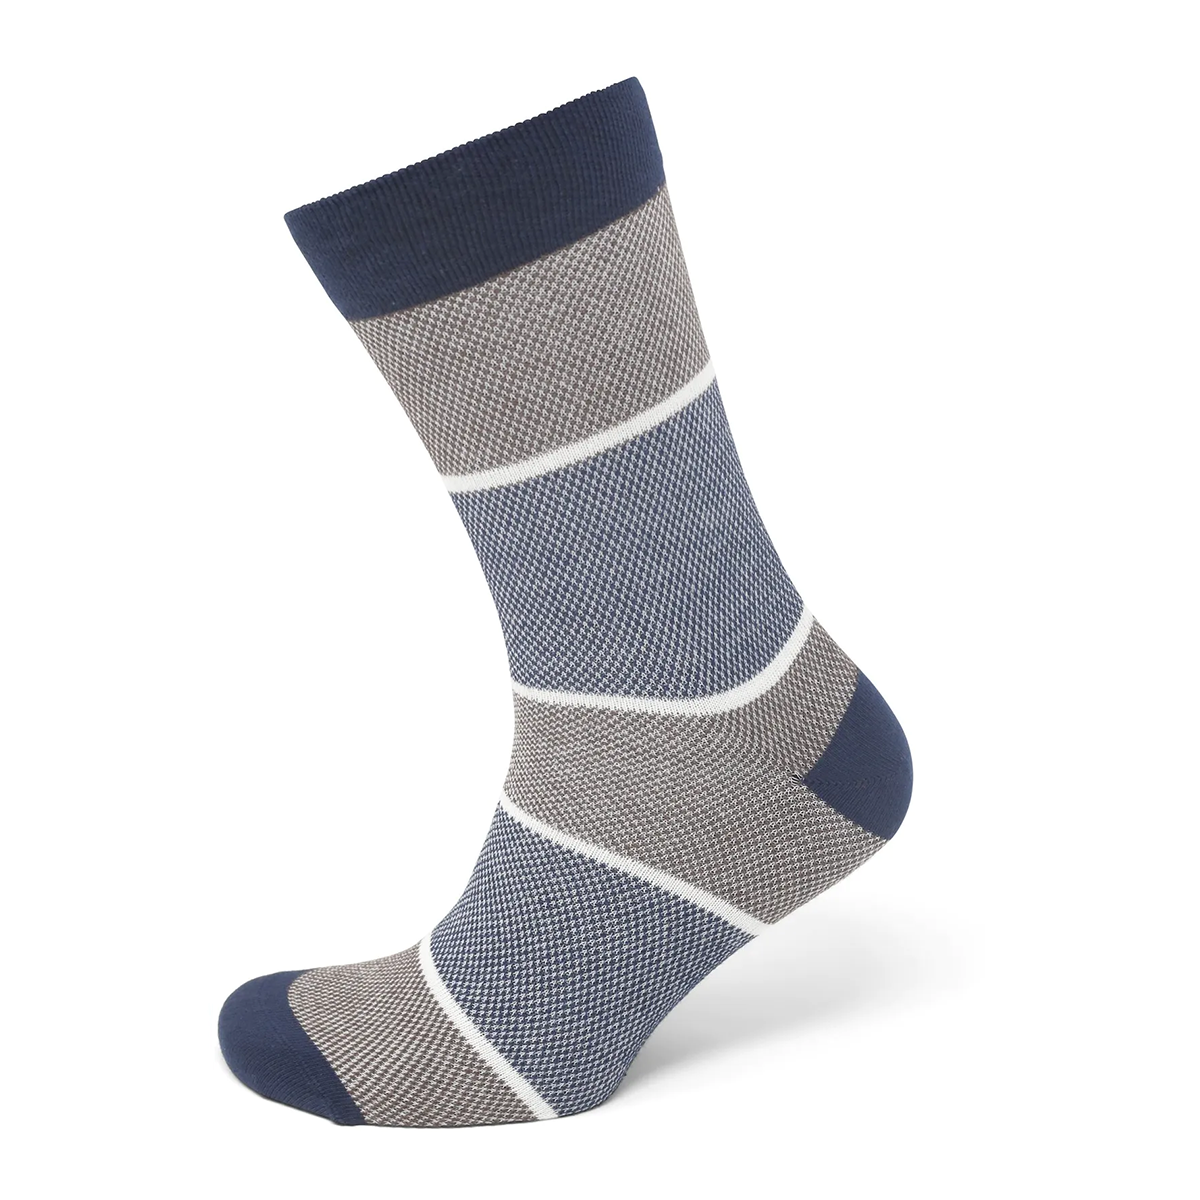 Tasker & Shaw | Luxury Menswear | Navy & grey striped woven socks, French Cotton